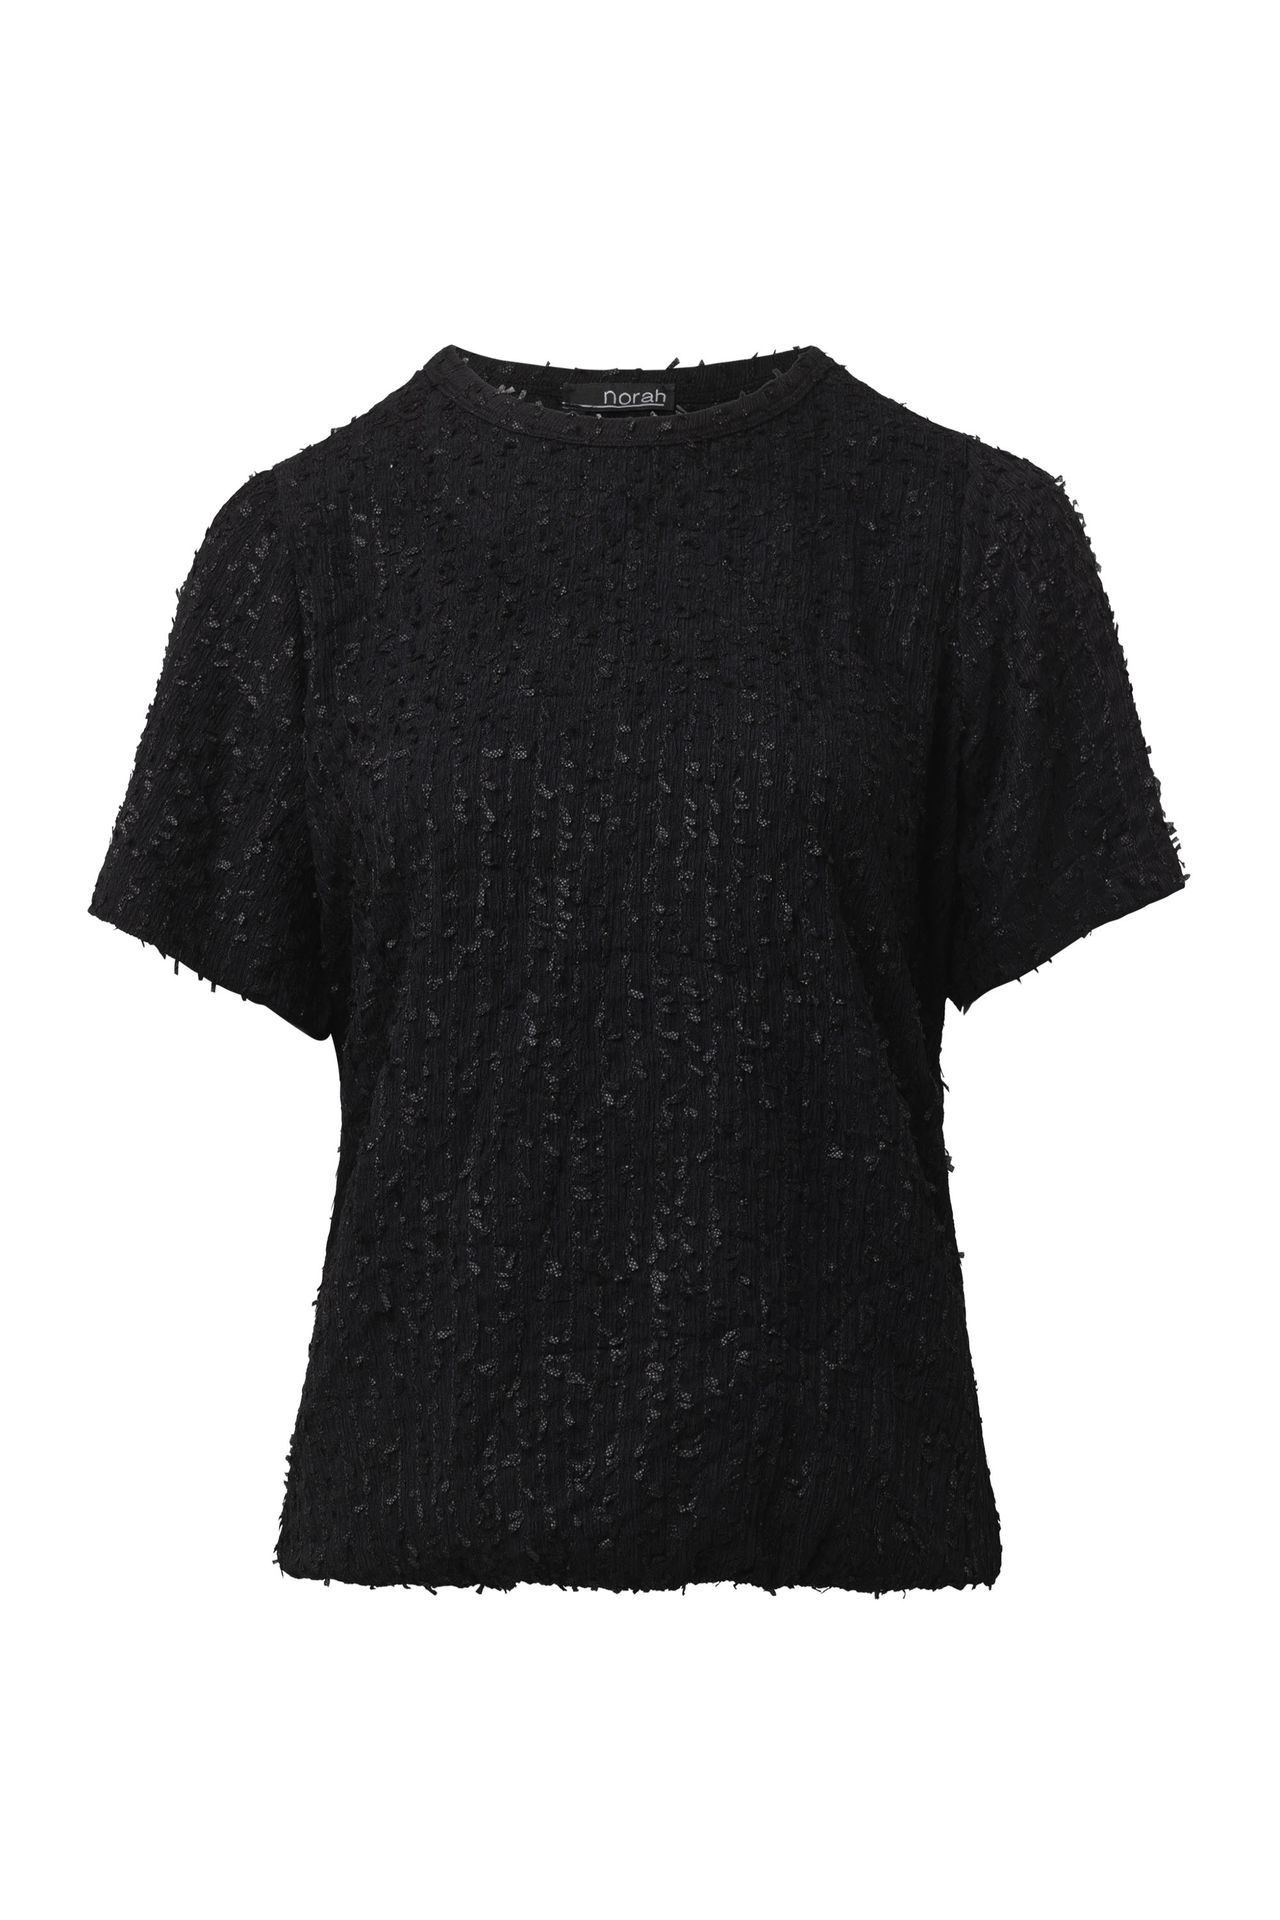 Norah Zwart shirt black 214673-001